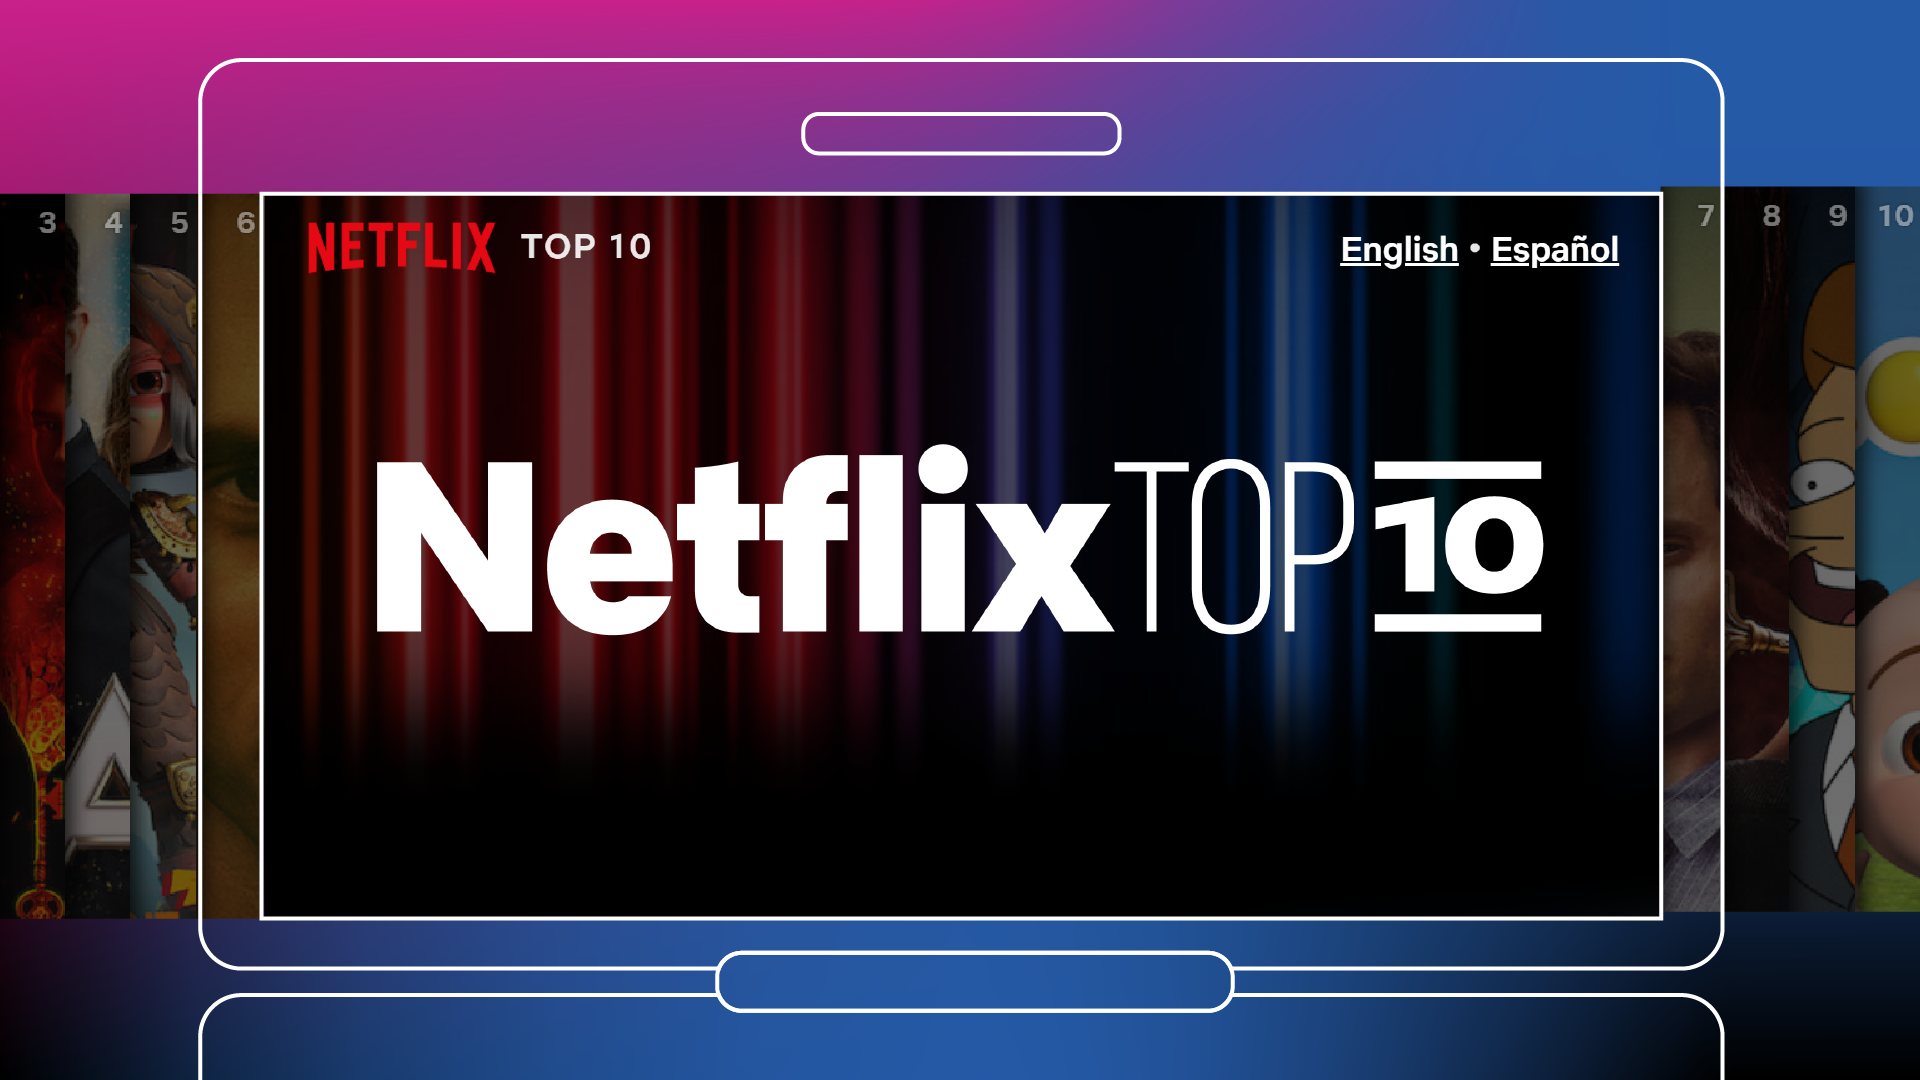 Netflix Launches New "Top10 on Netflix" Website Spring Tribune